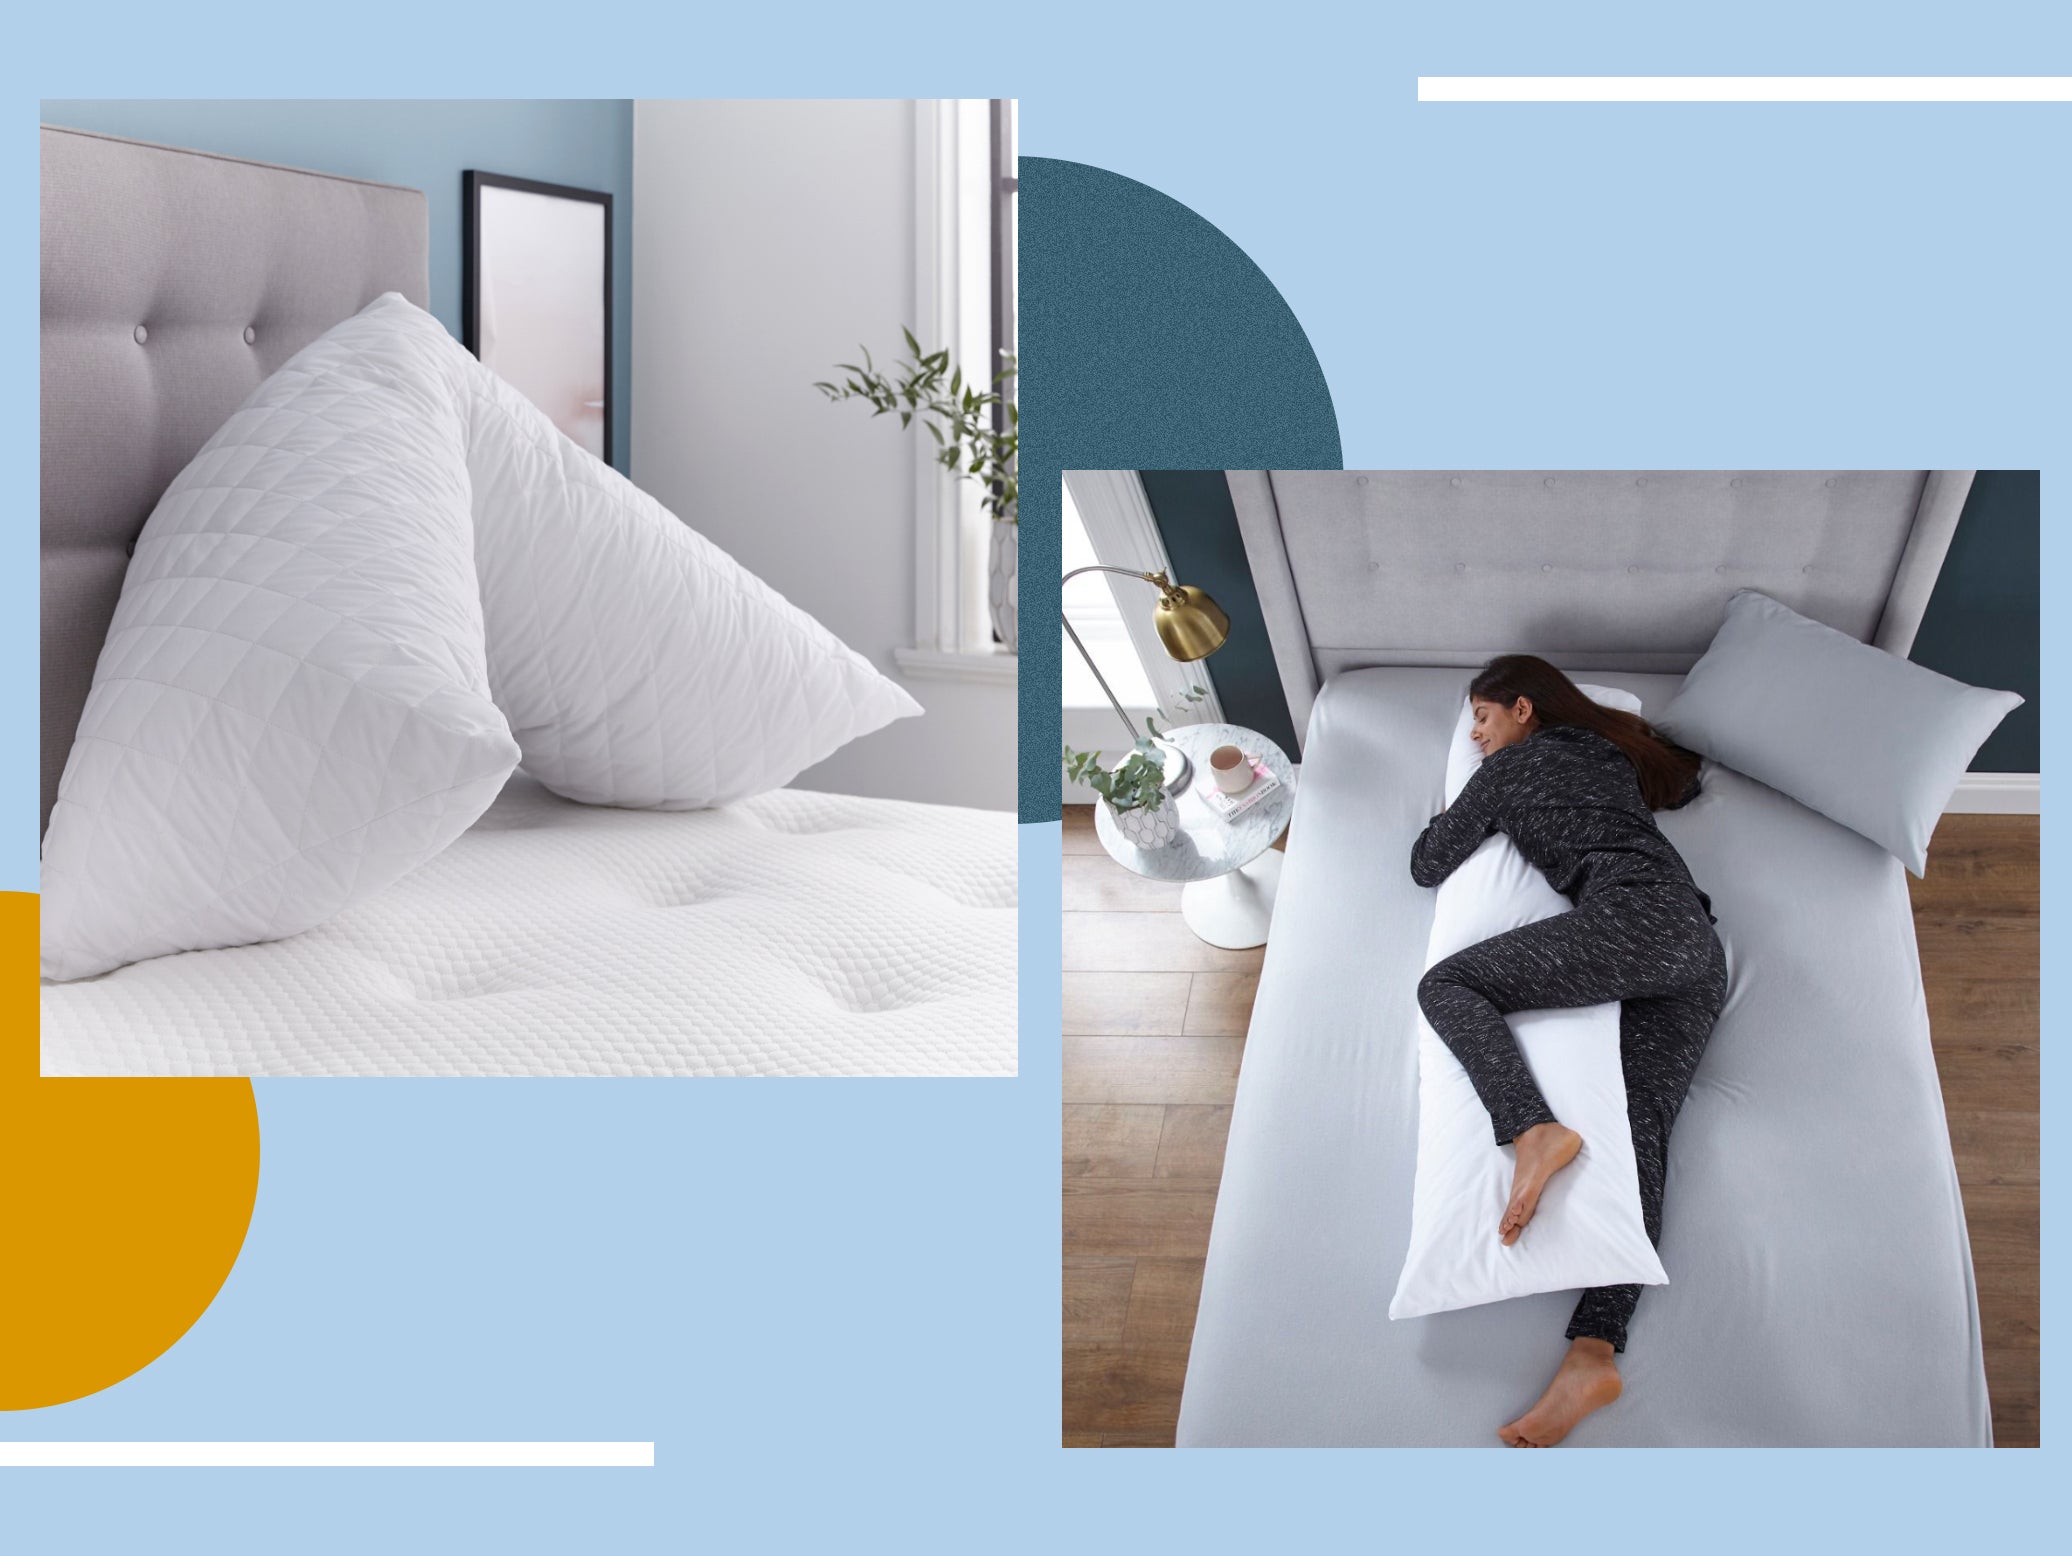 Silentnight body support pillow review: Design, features